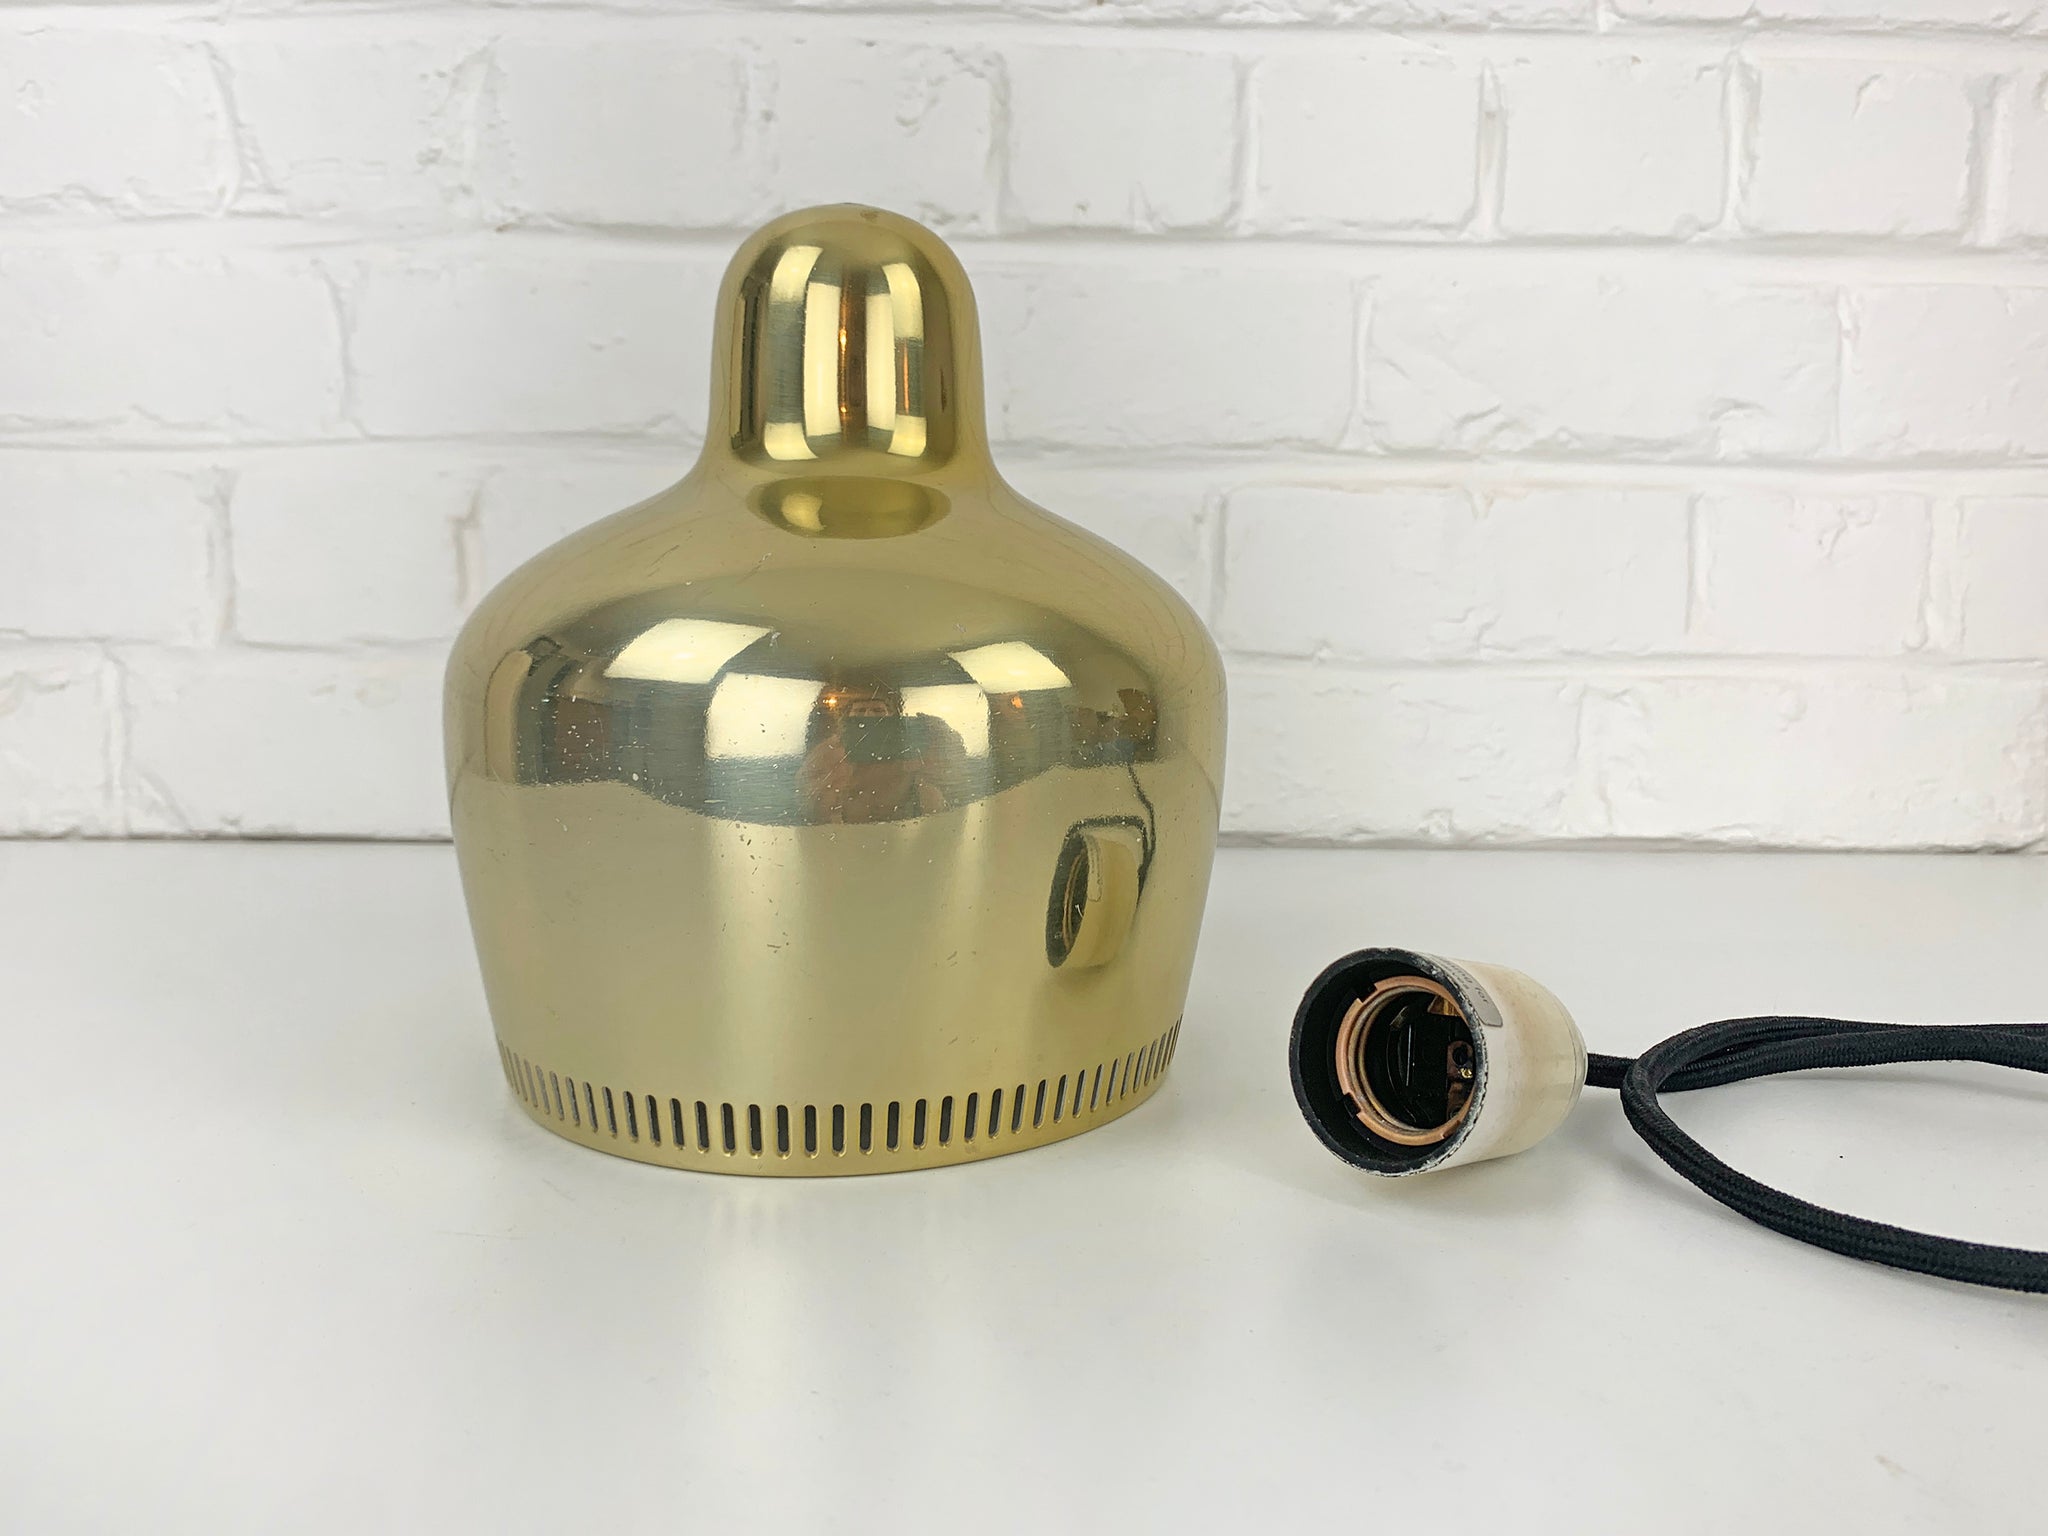 Vintage Golden Bell Pendant Lamp by Alvar Aalto for Louis Poulsen, 196 –  Bert Mauritz